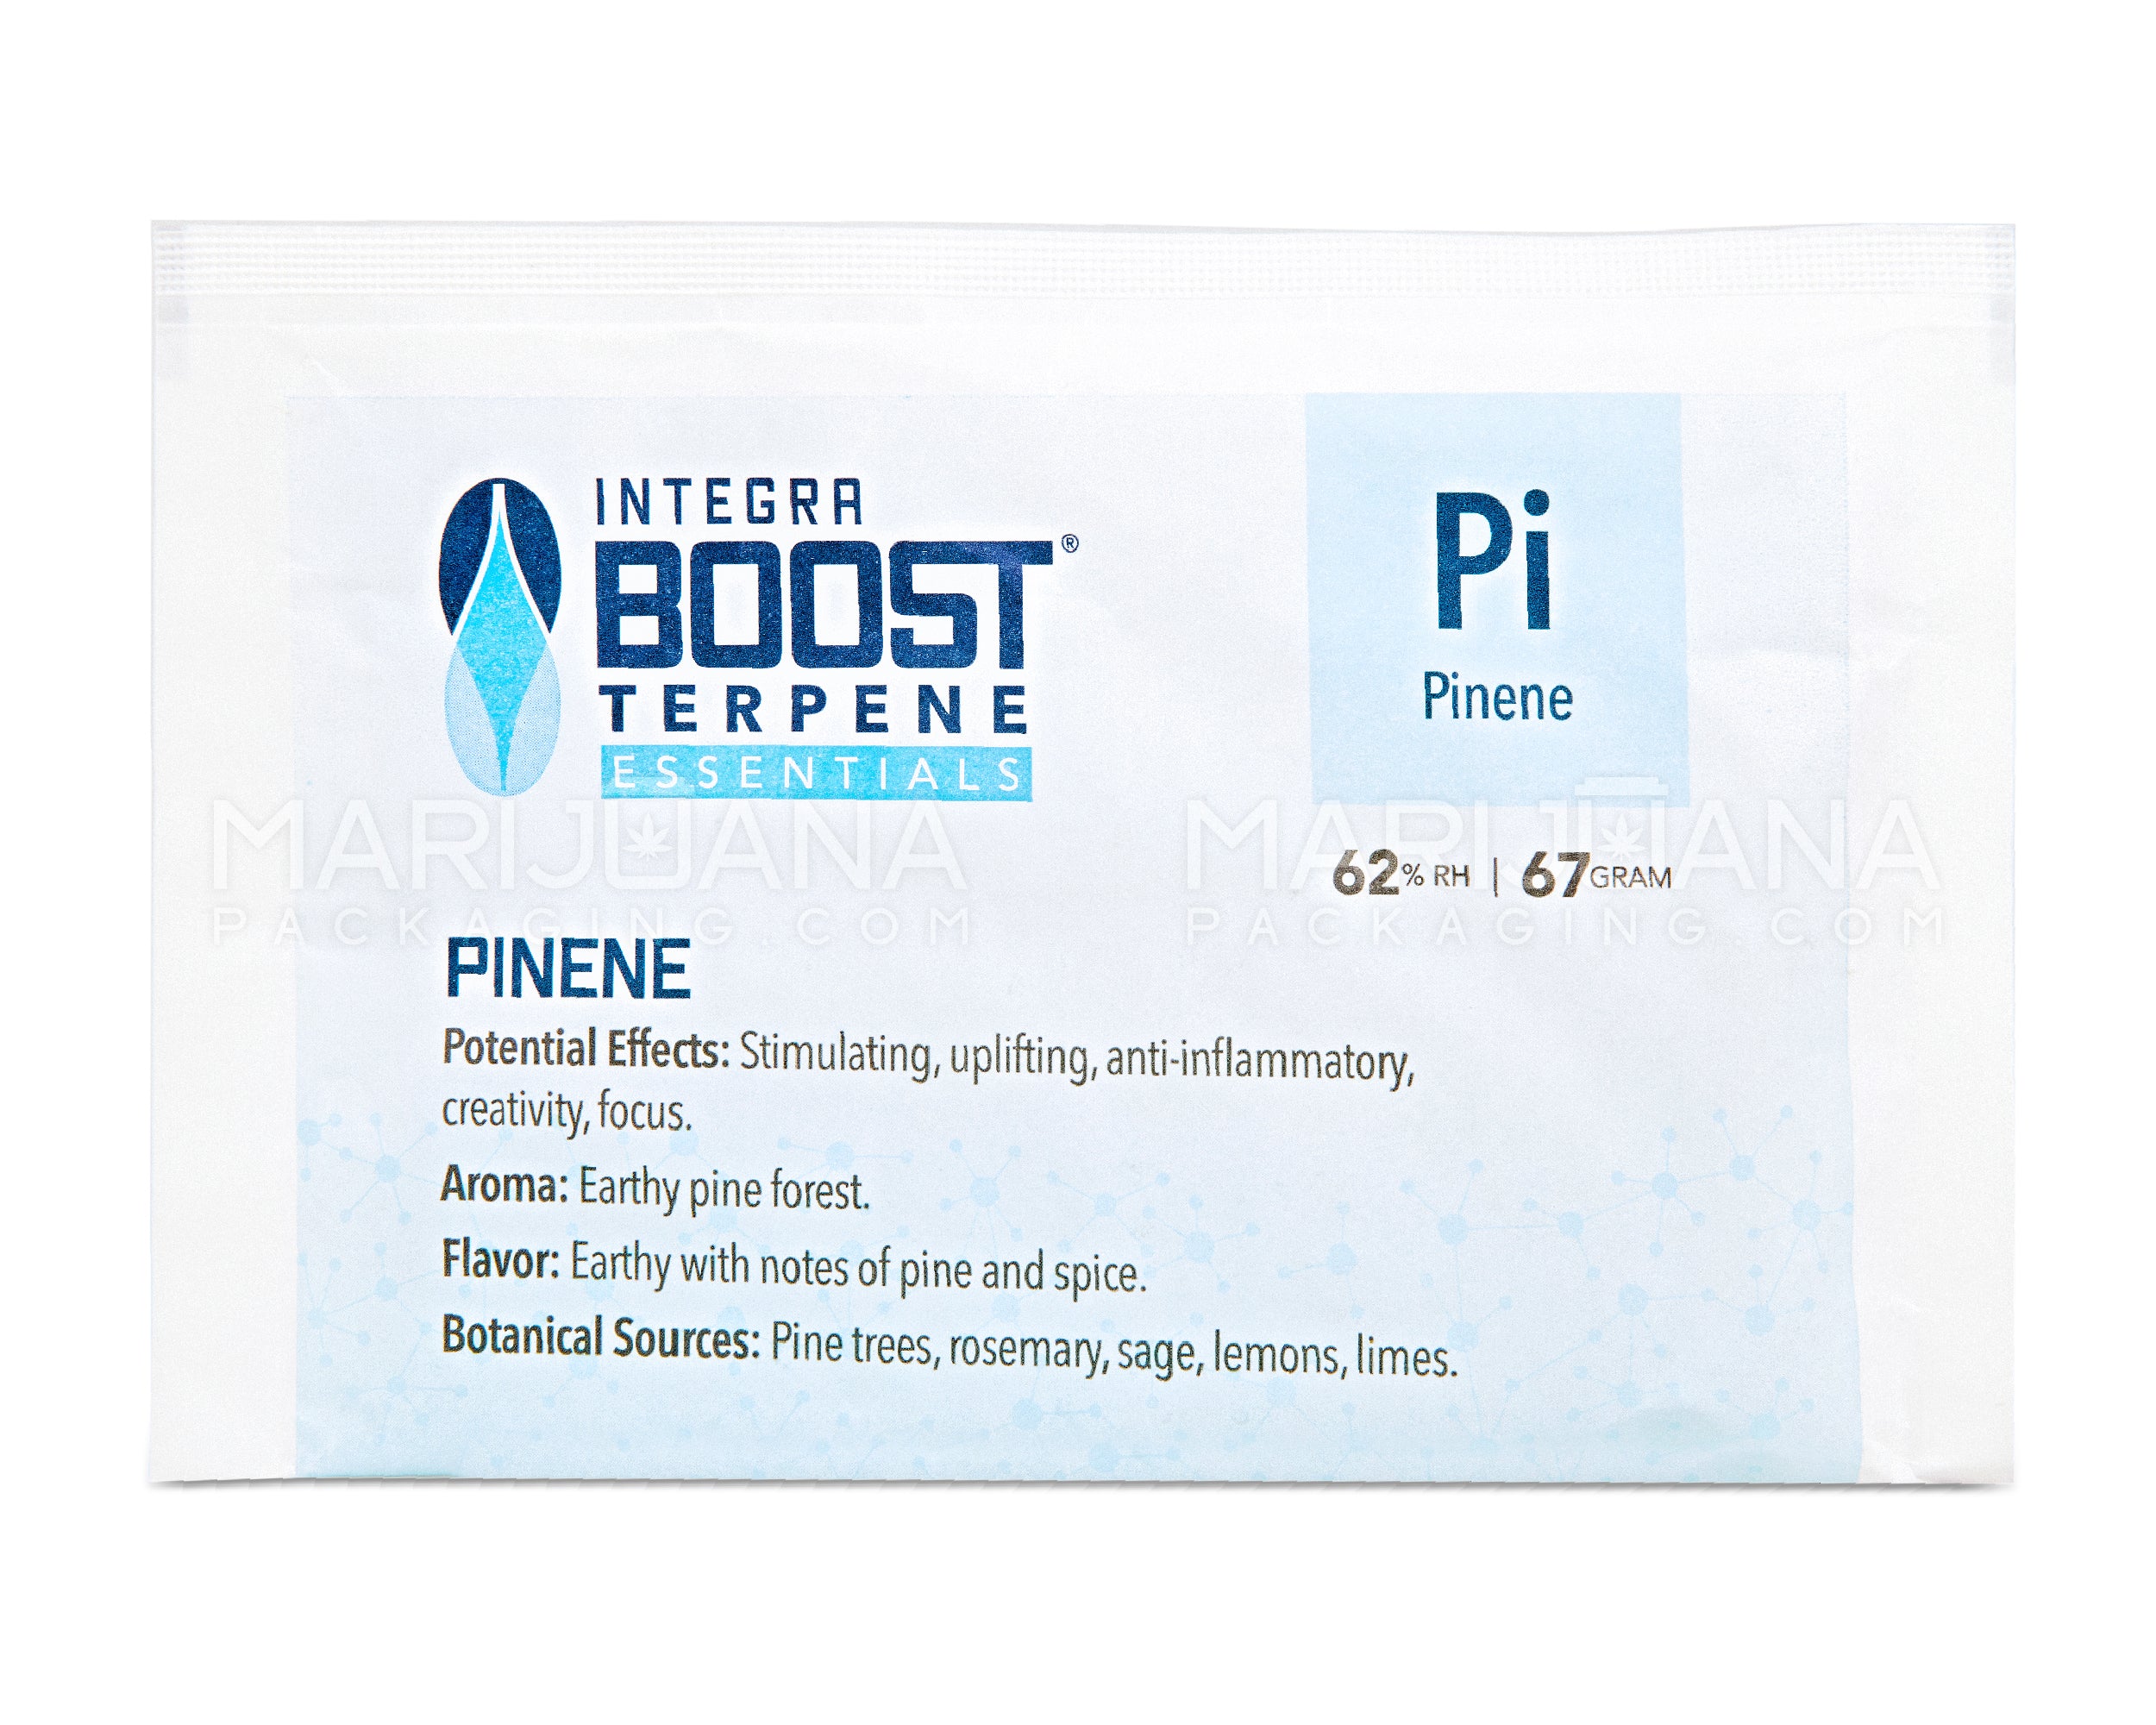 INTEGRA | 'Retail Display' Boost Terpene Essentials Pinene Humidity Pack | 67 Grams - 62% - 12 Count - 2